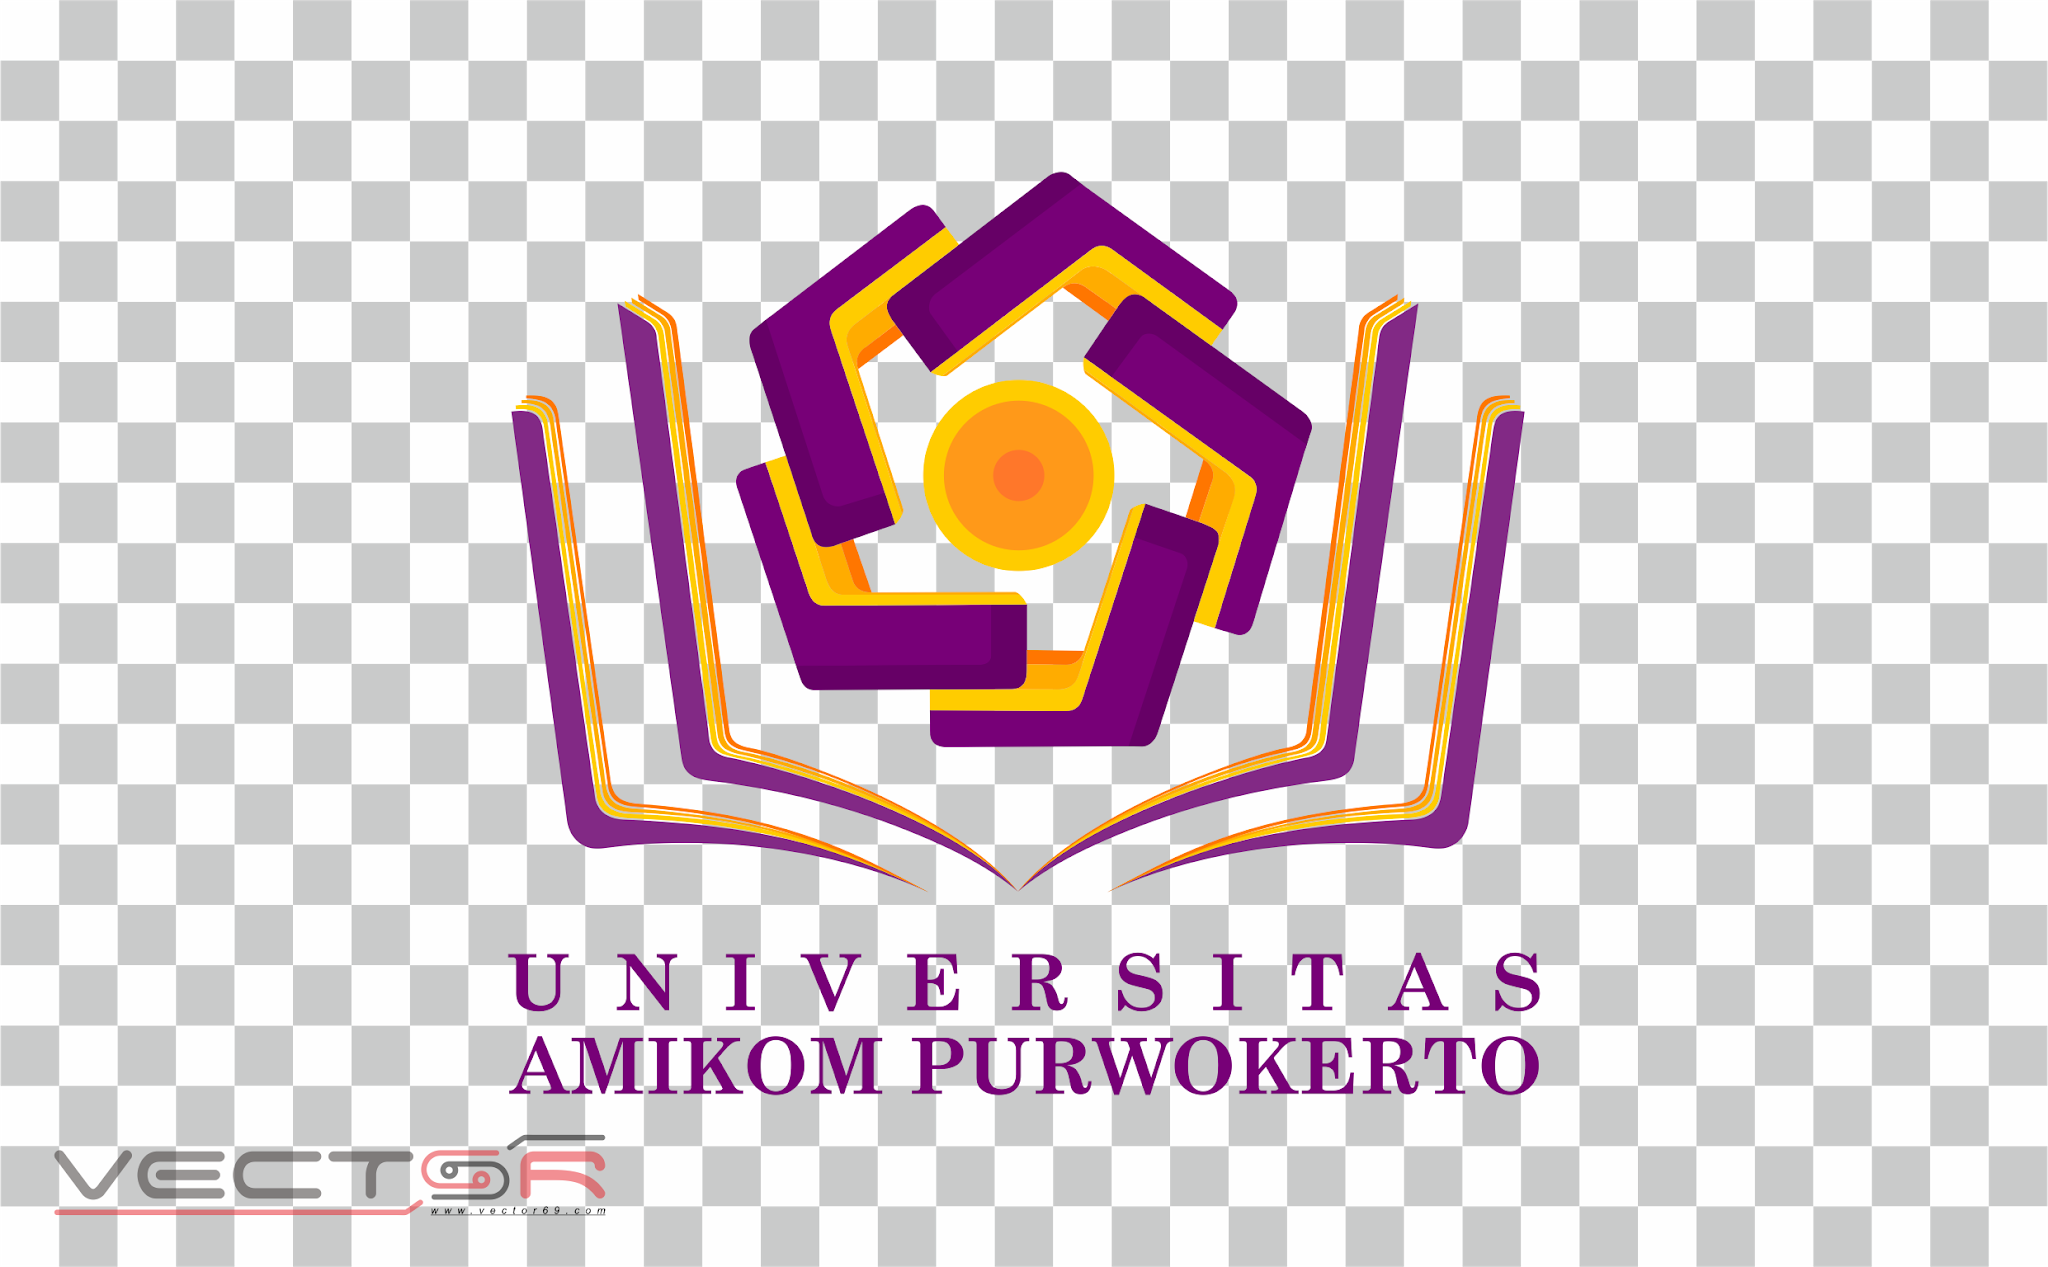 Universitas Amikom Purwokerto Logo - Download Vector File PNG (Portable Network Graphics)